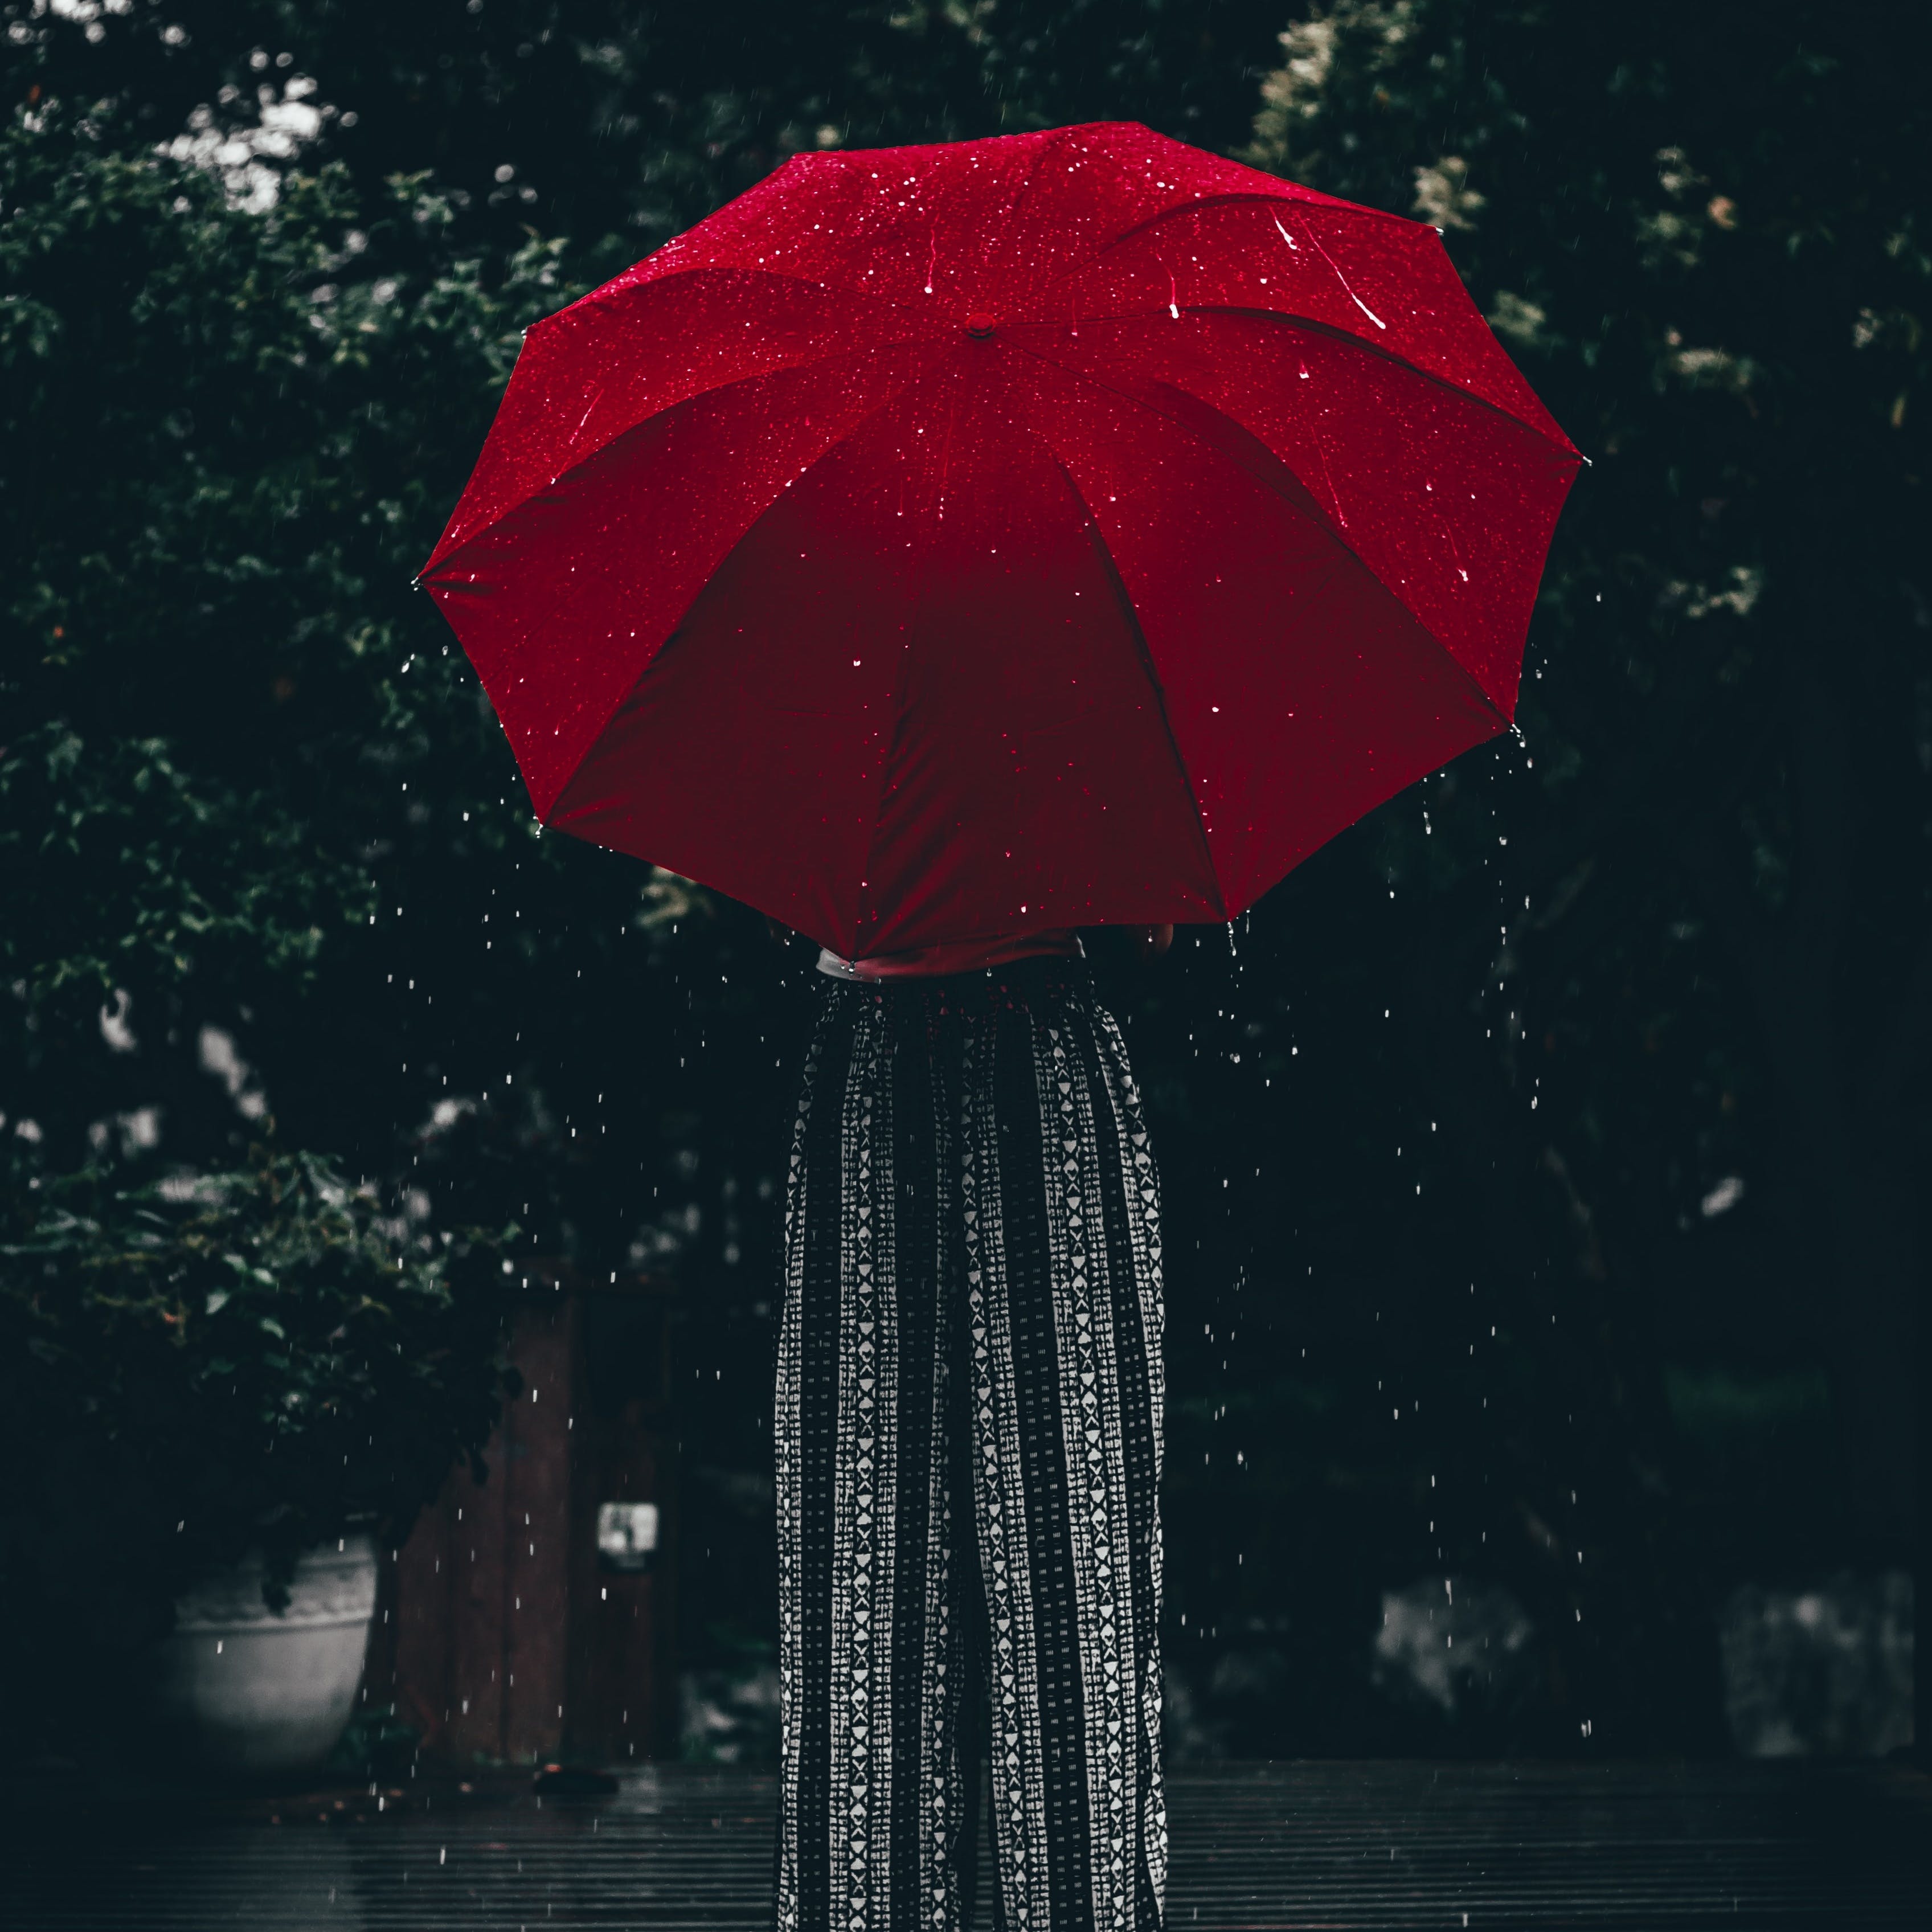 Umbrella,Red,Rain,Sky,Water,Tree,Tints and shades,Fashion accessory,Night,Plant